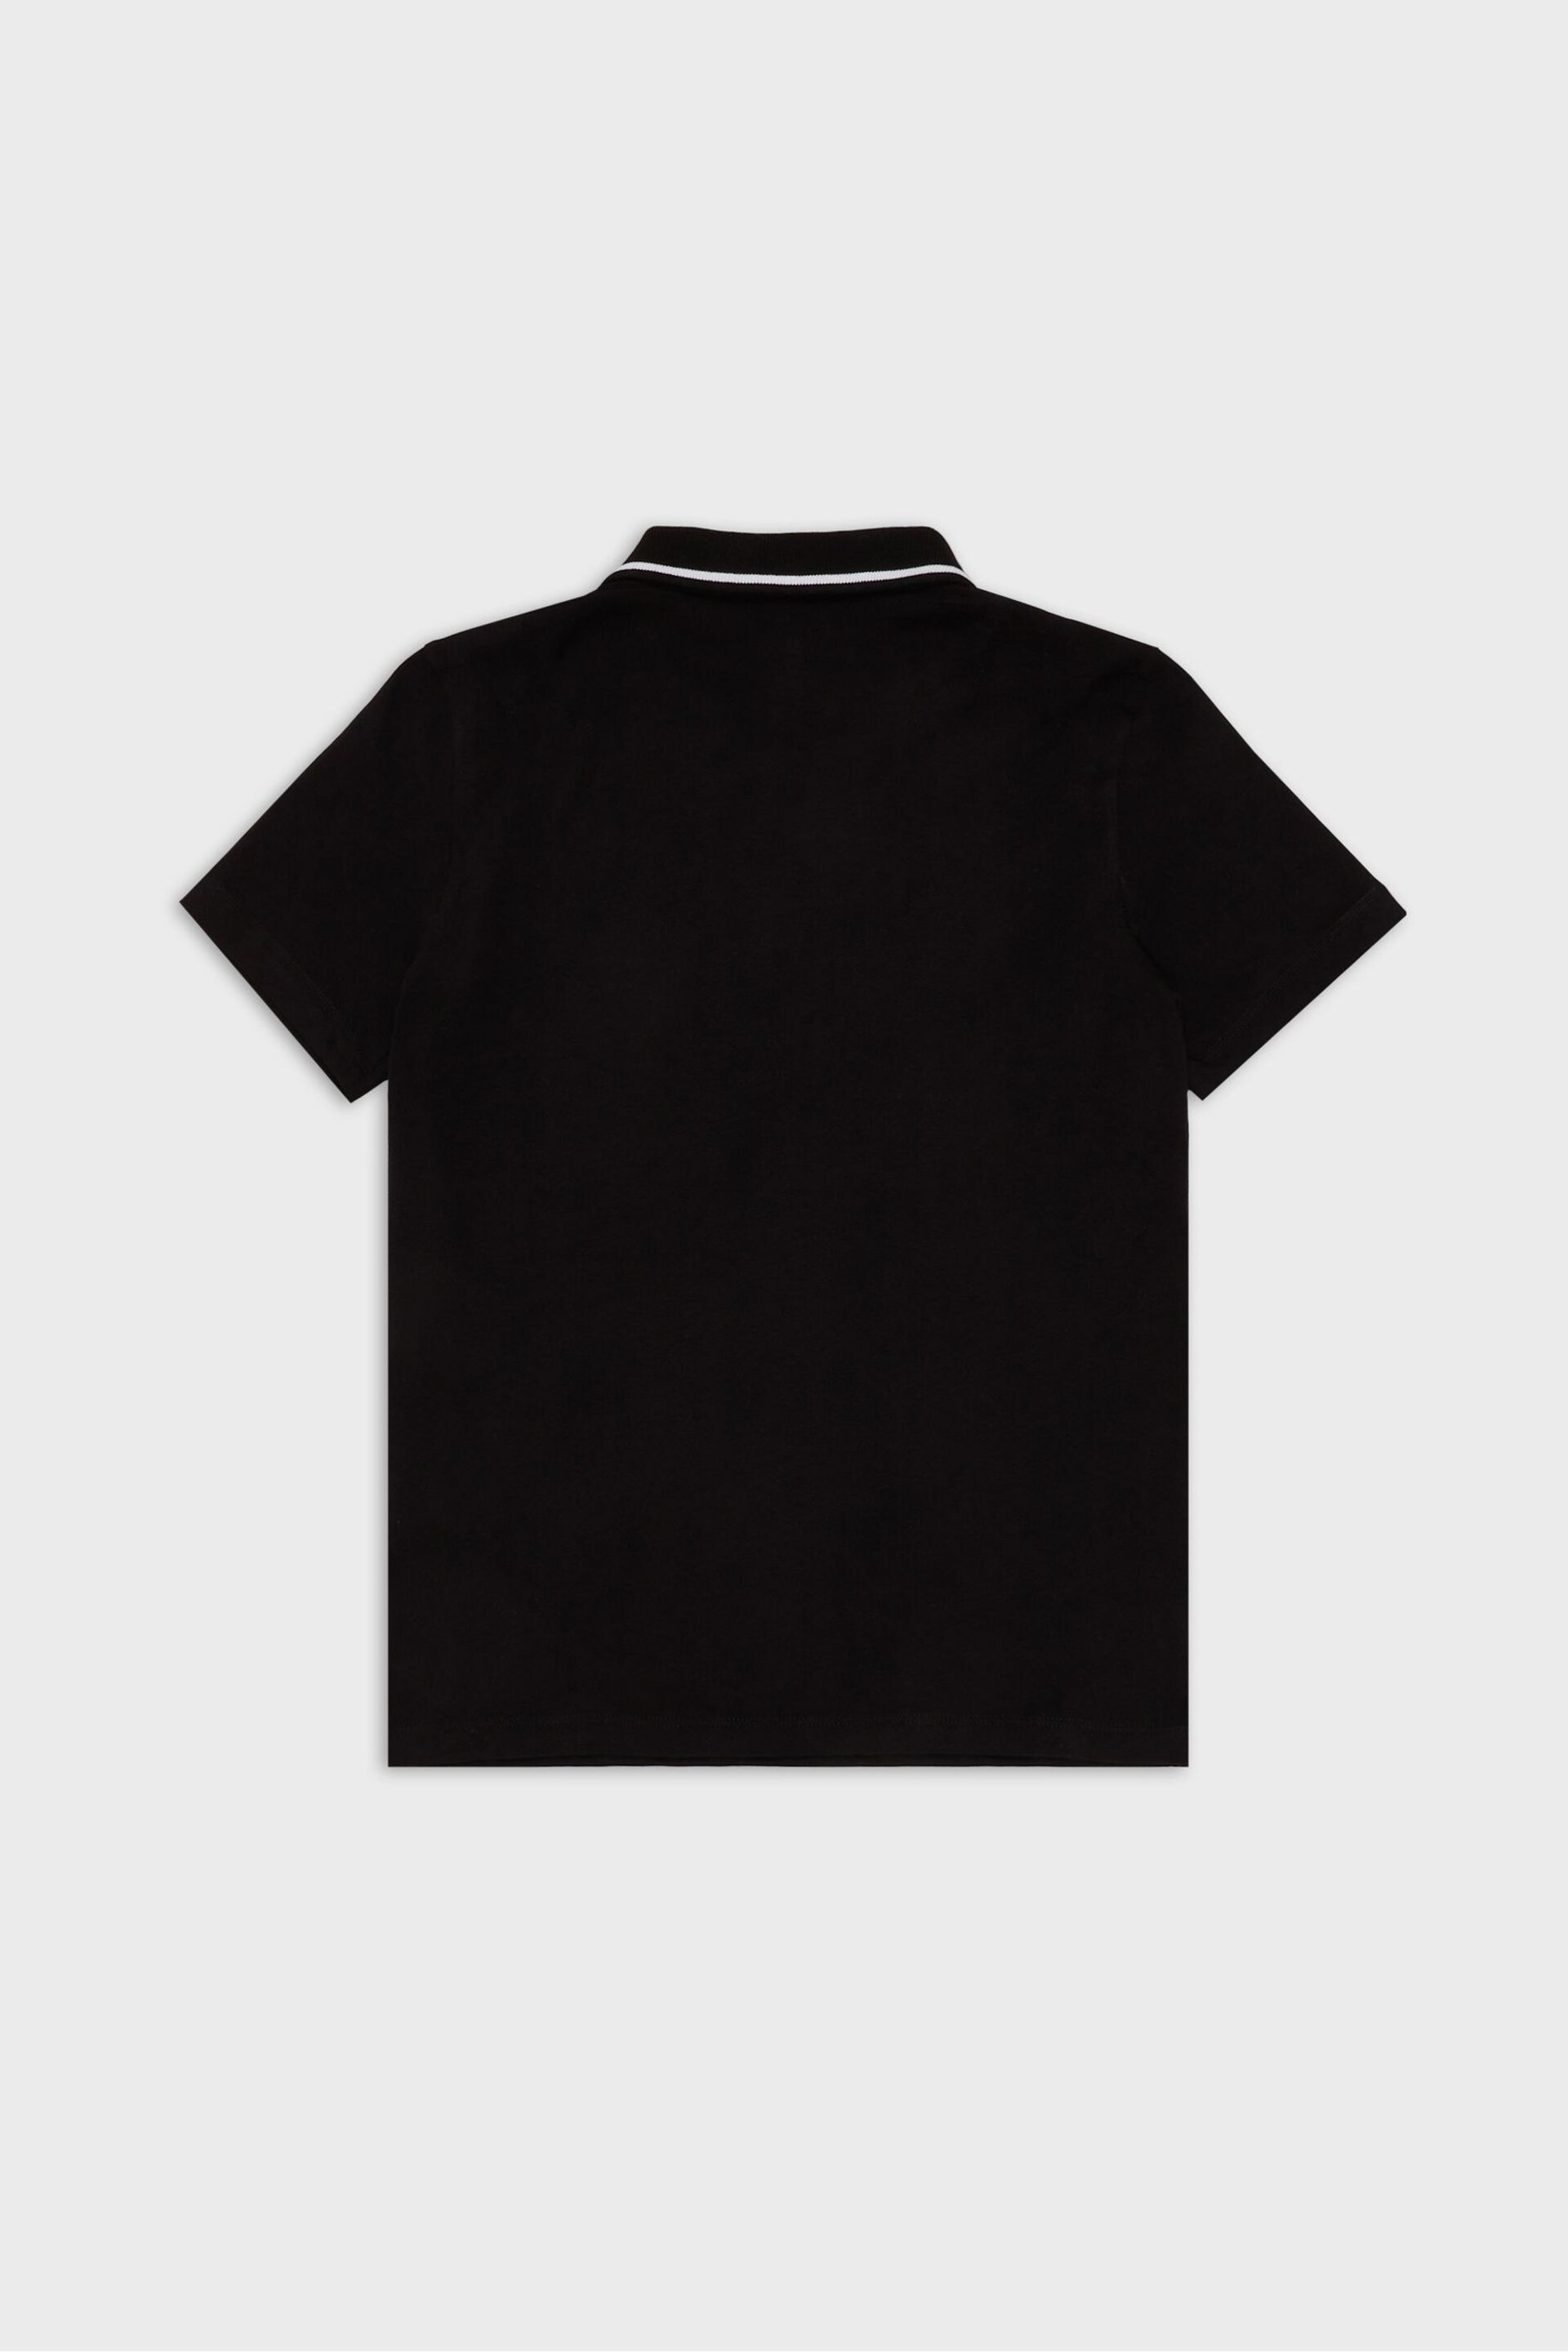 Emporio Armani EA7 Boys Core ID Polo Shirt - Image 2 of 3